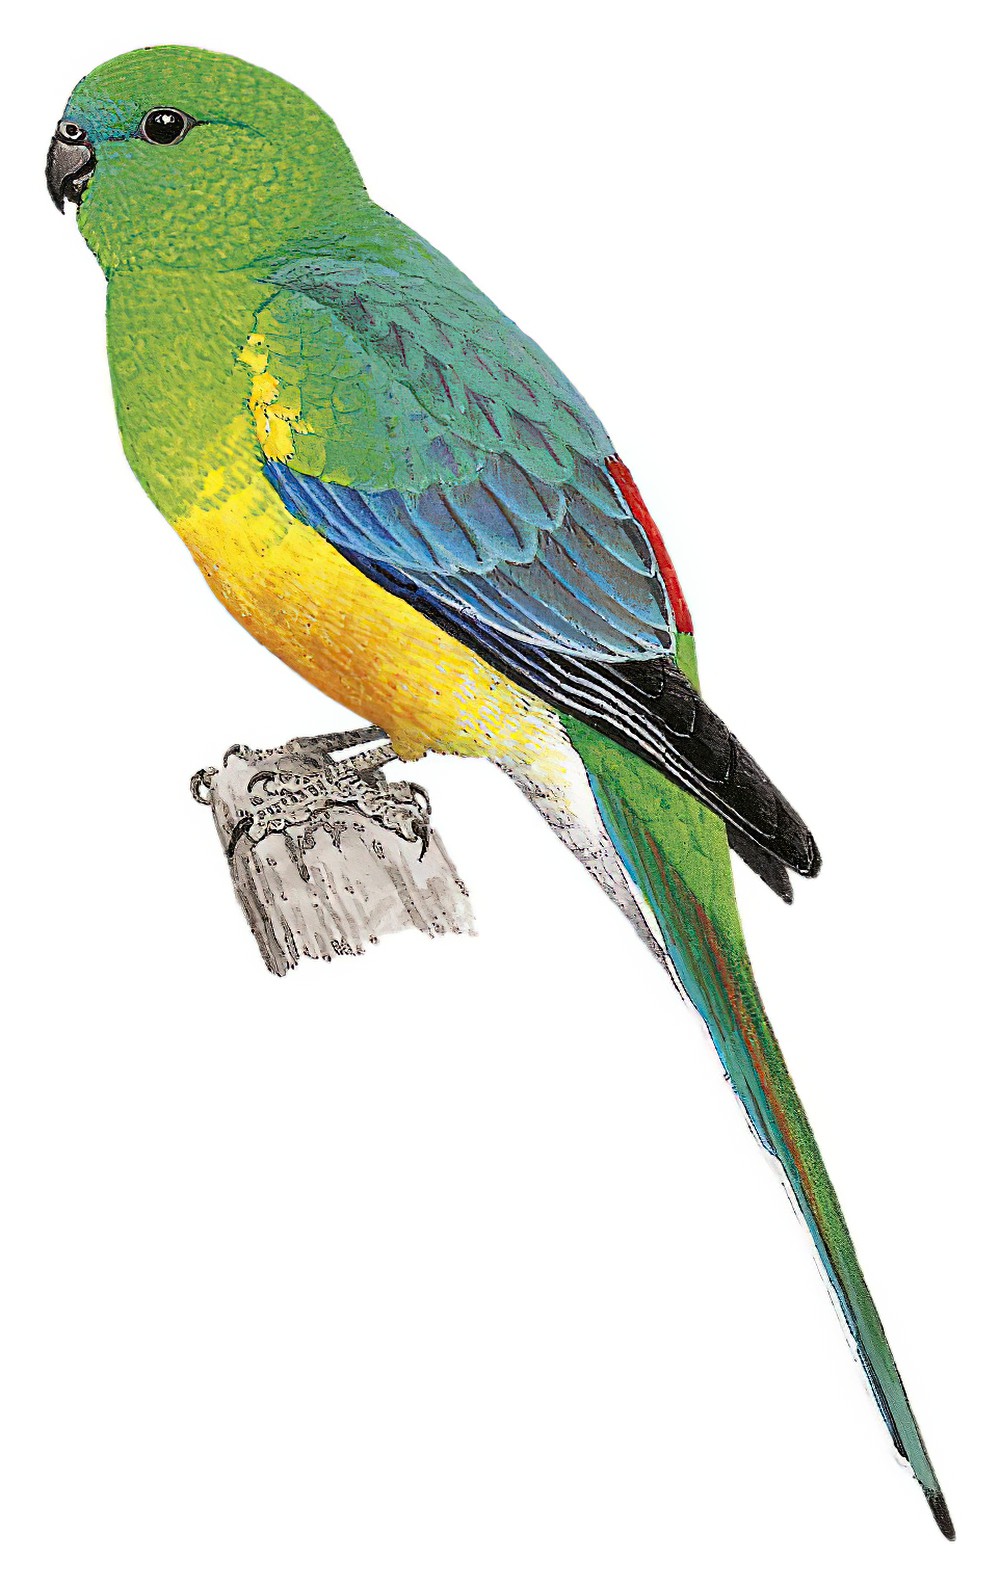 Red-rumped Parrot / Psephotus haematonotus